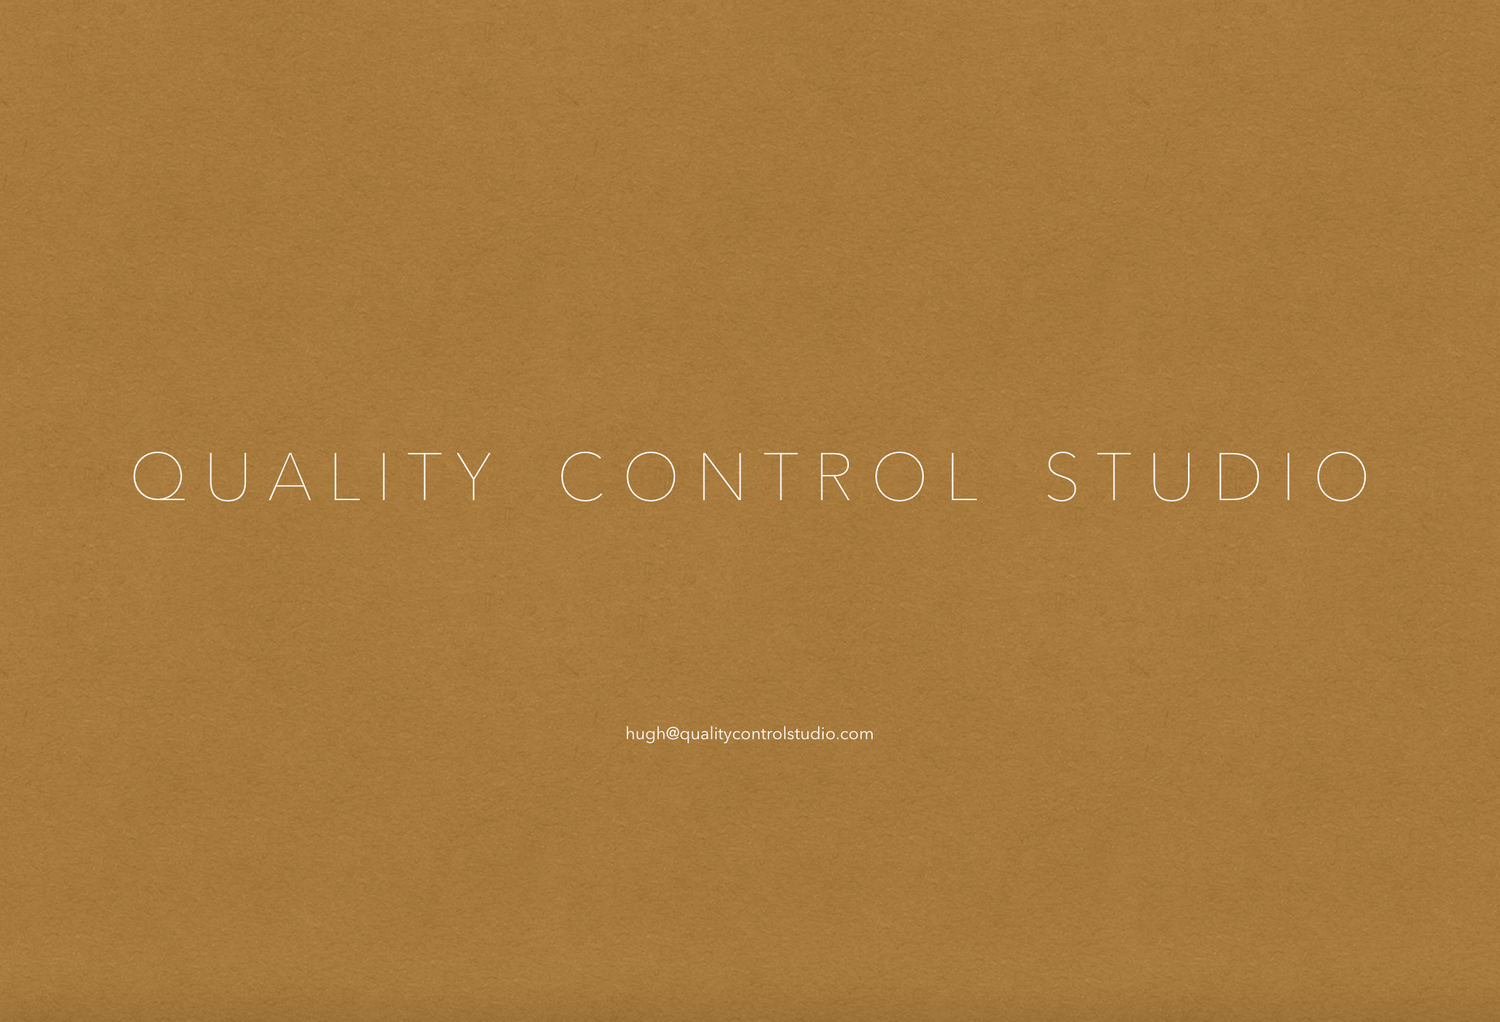 QUALITY CONTROL STUDIO